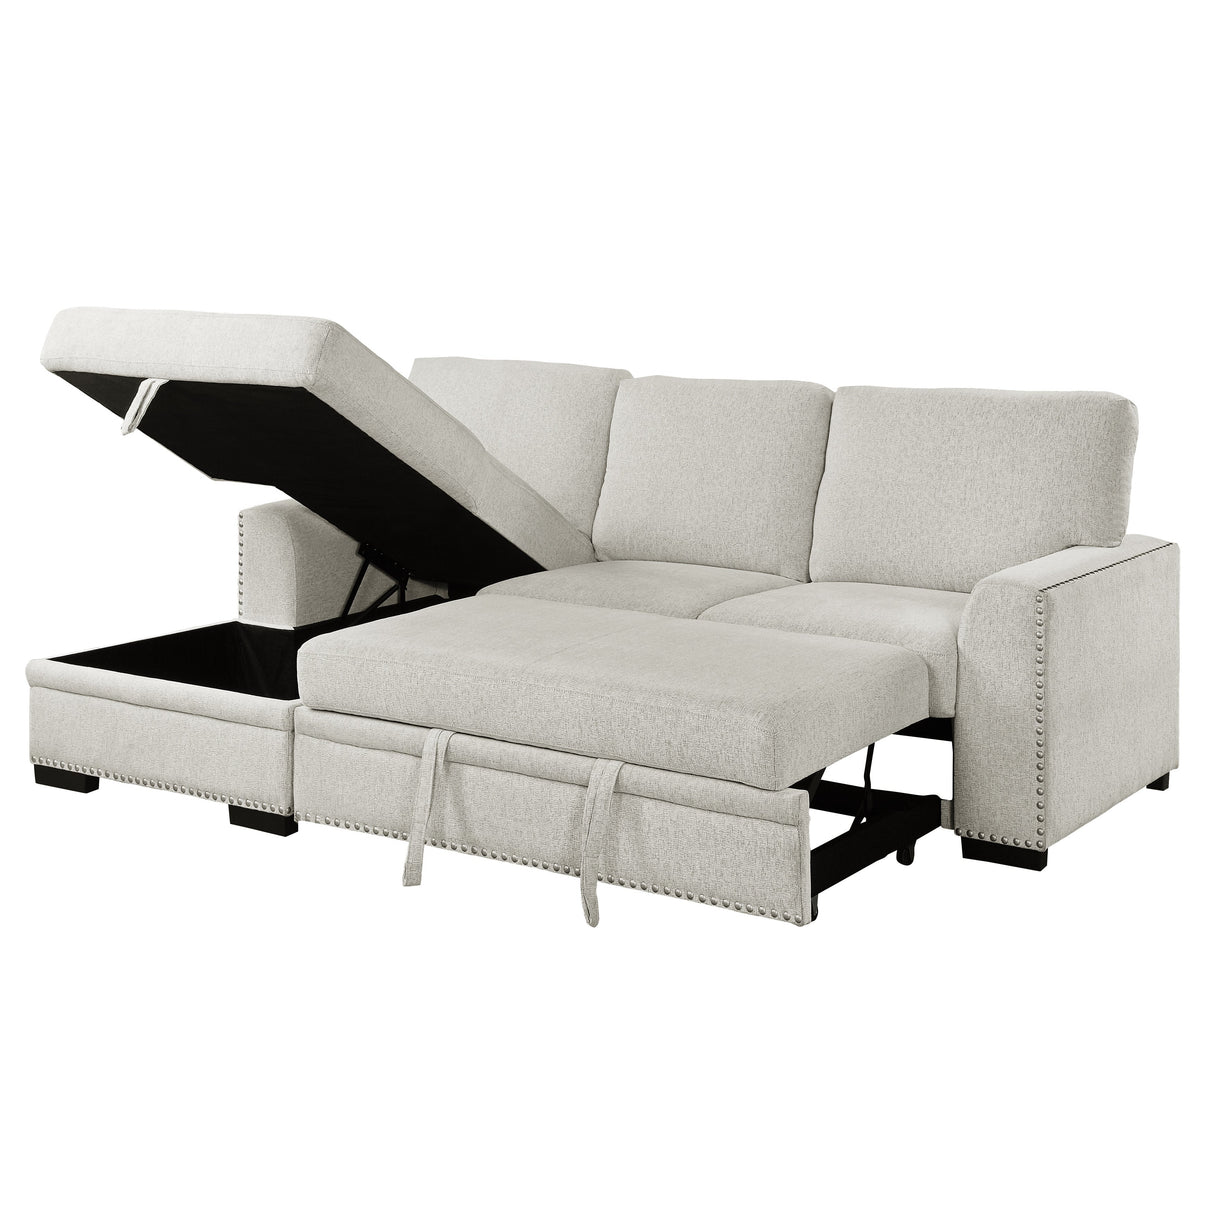 Morelia Beige LAF Storage Sleeper Sofa Chaise